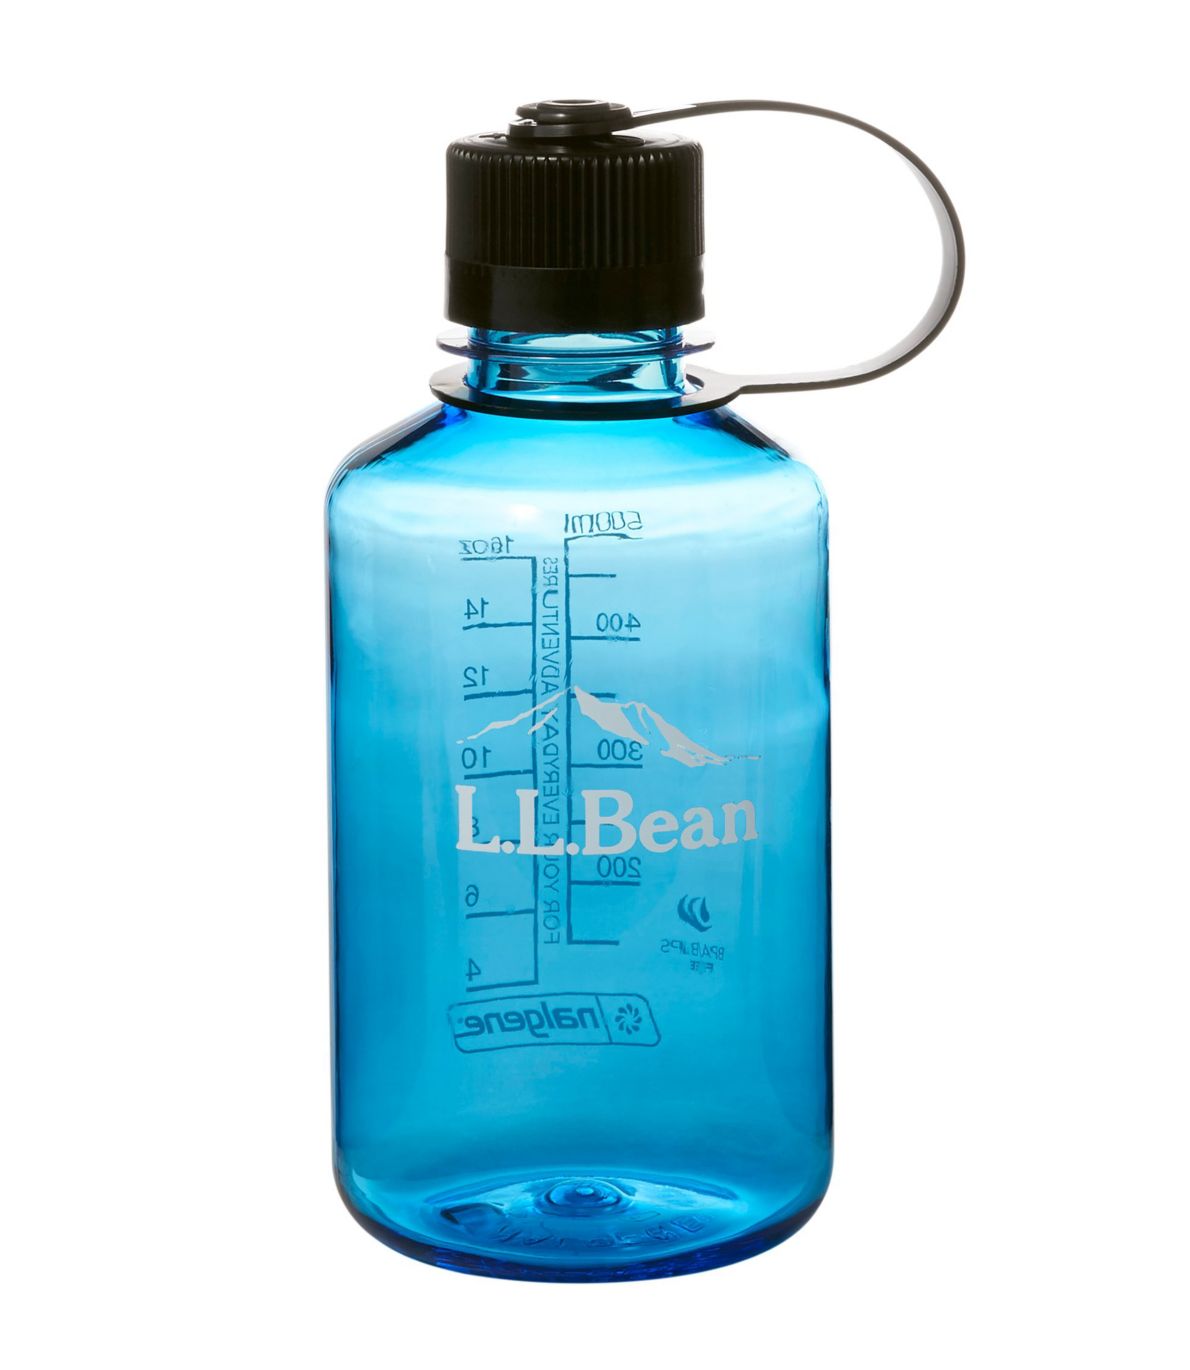 Nalgene Narrow Mouth Water Bottle with L.L.Bean Logo, 16 oz.